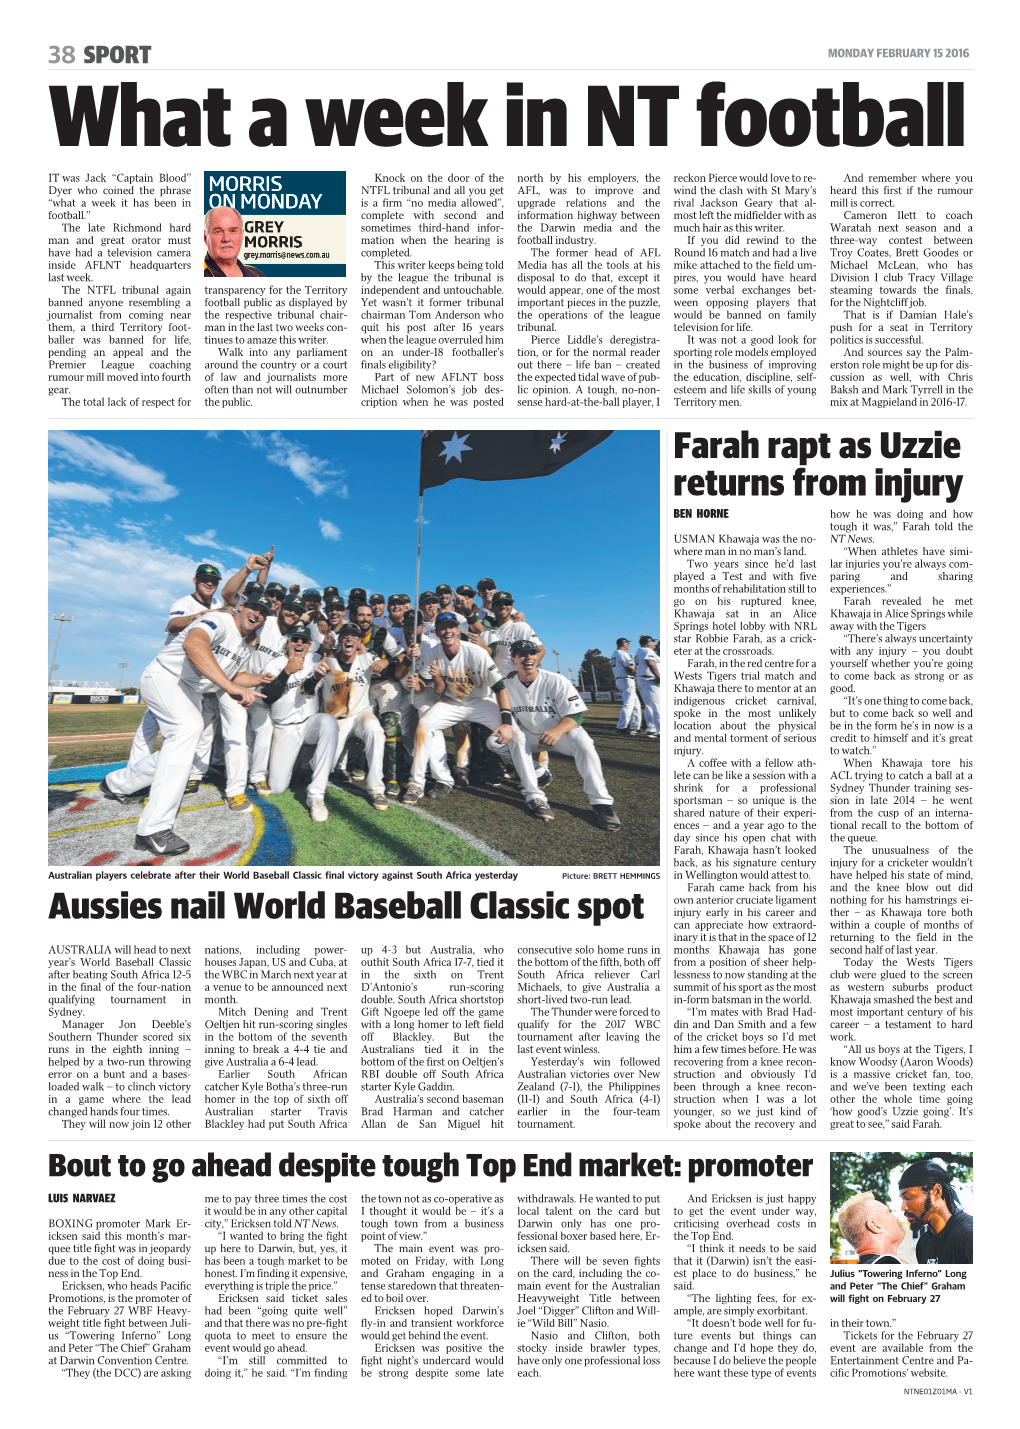 Aussies Nail World Baseball Classic Spot Farah Rapt